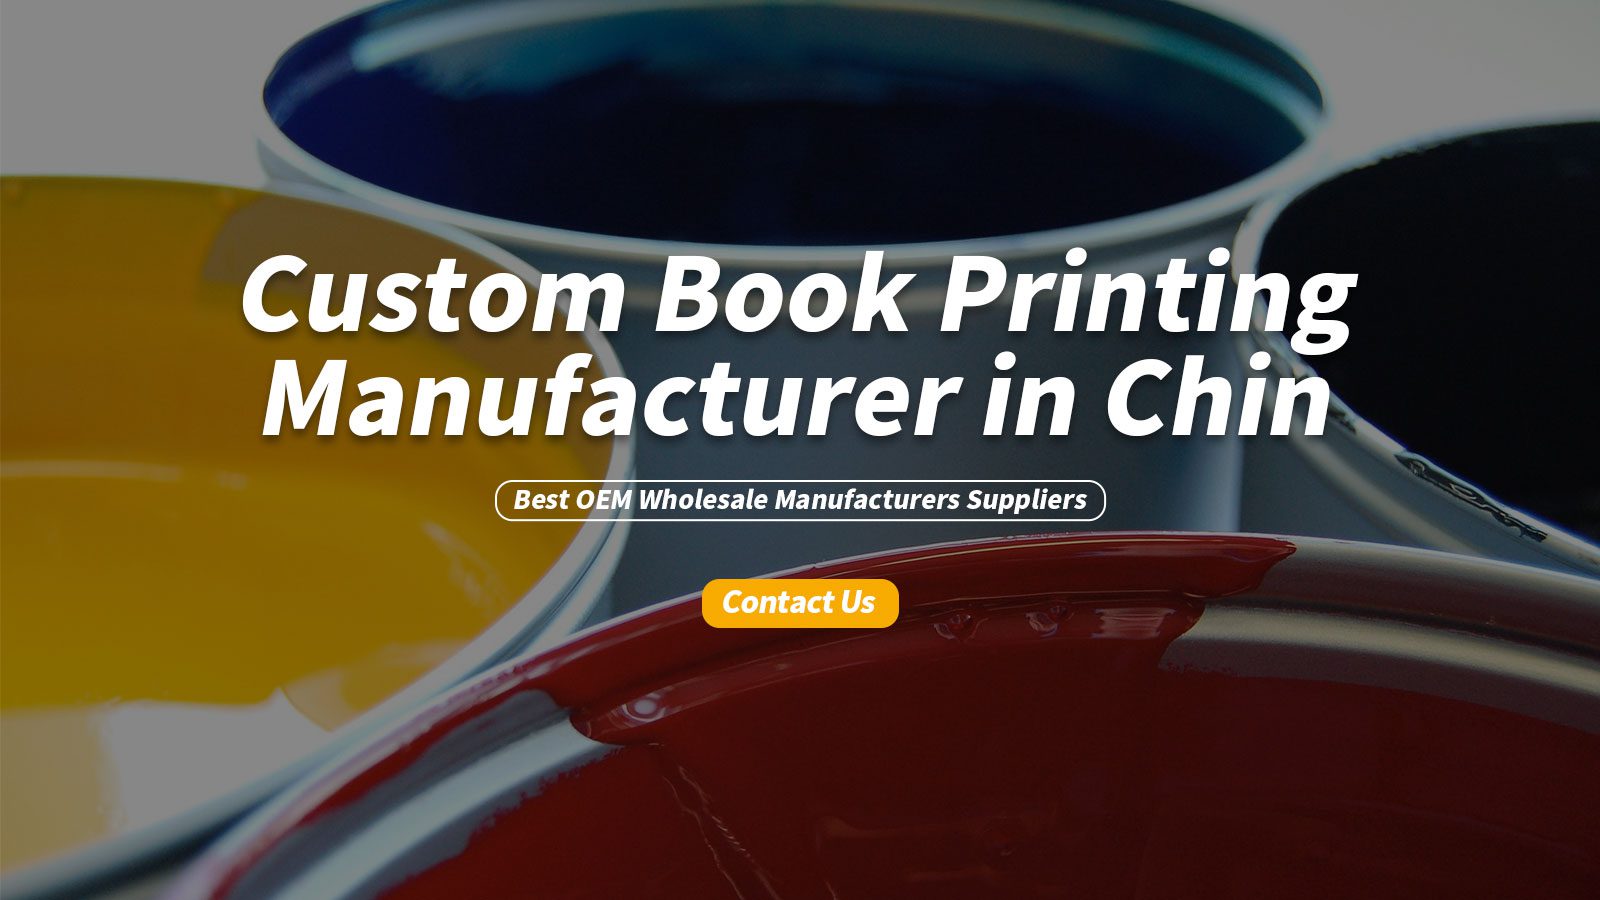 China book printing Manufacturers